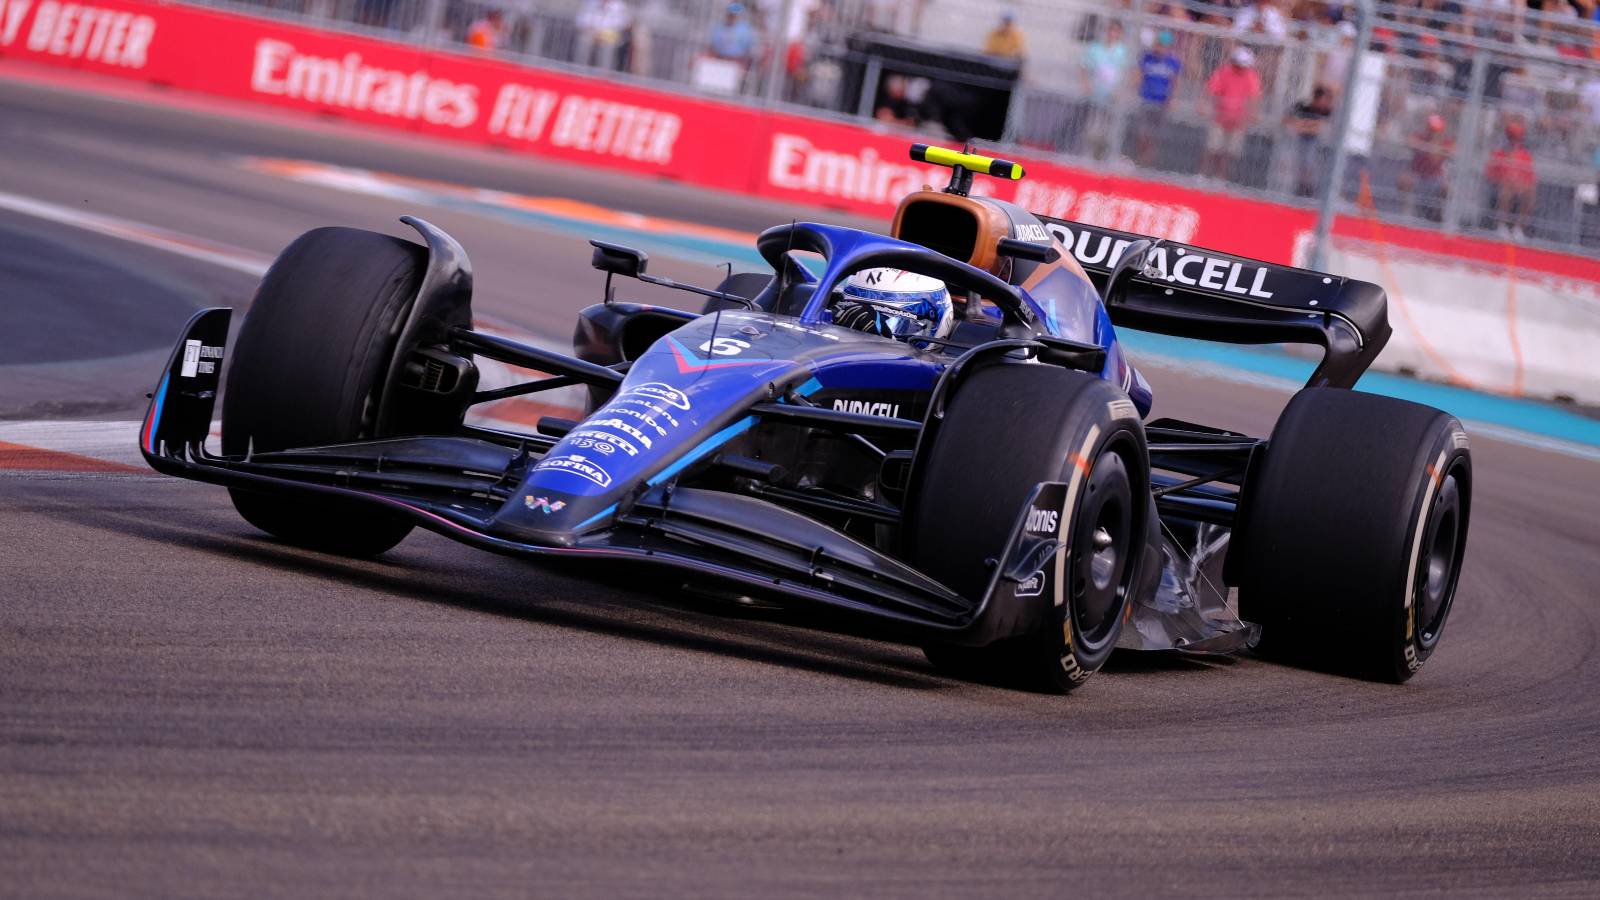 Nicholas Latifi drives the Williams in Miami. United States, May 2022.